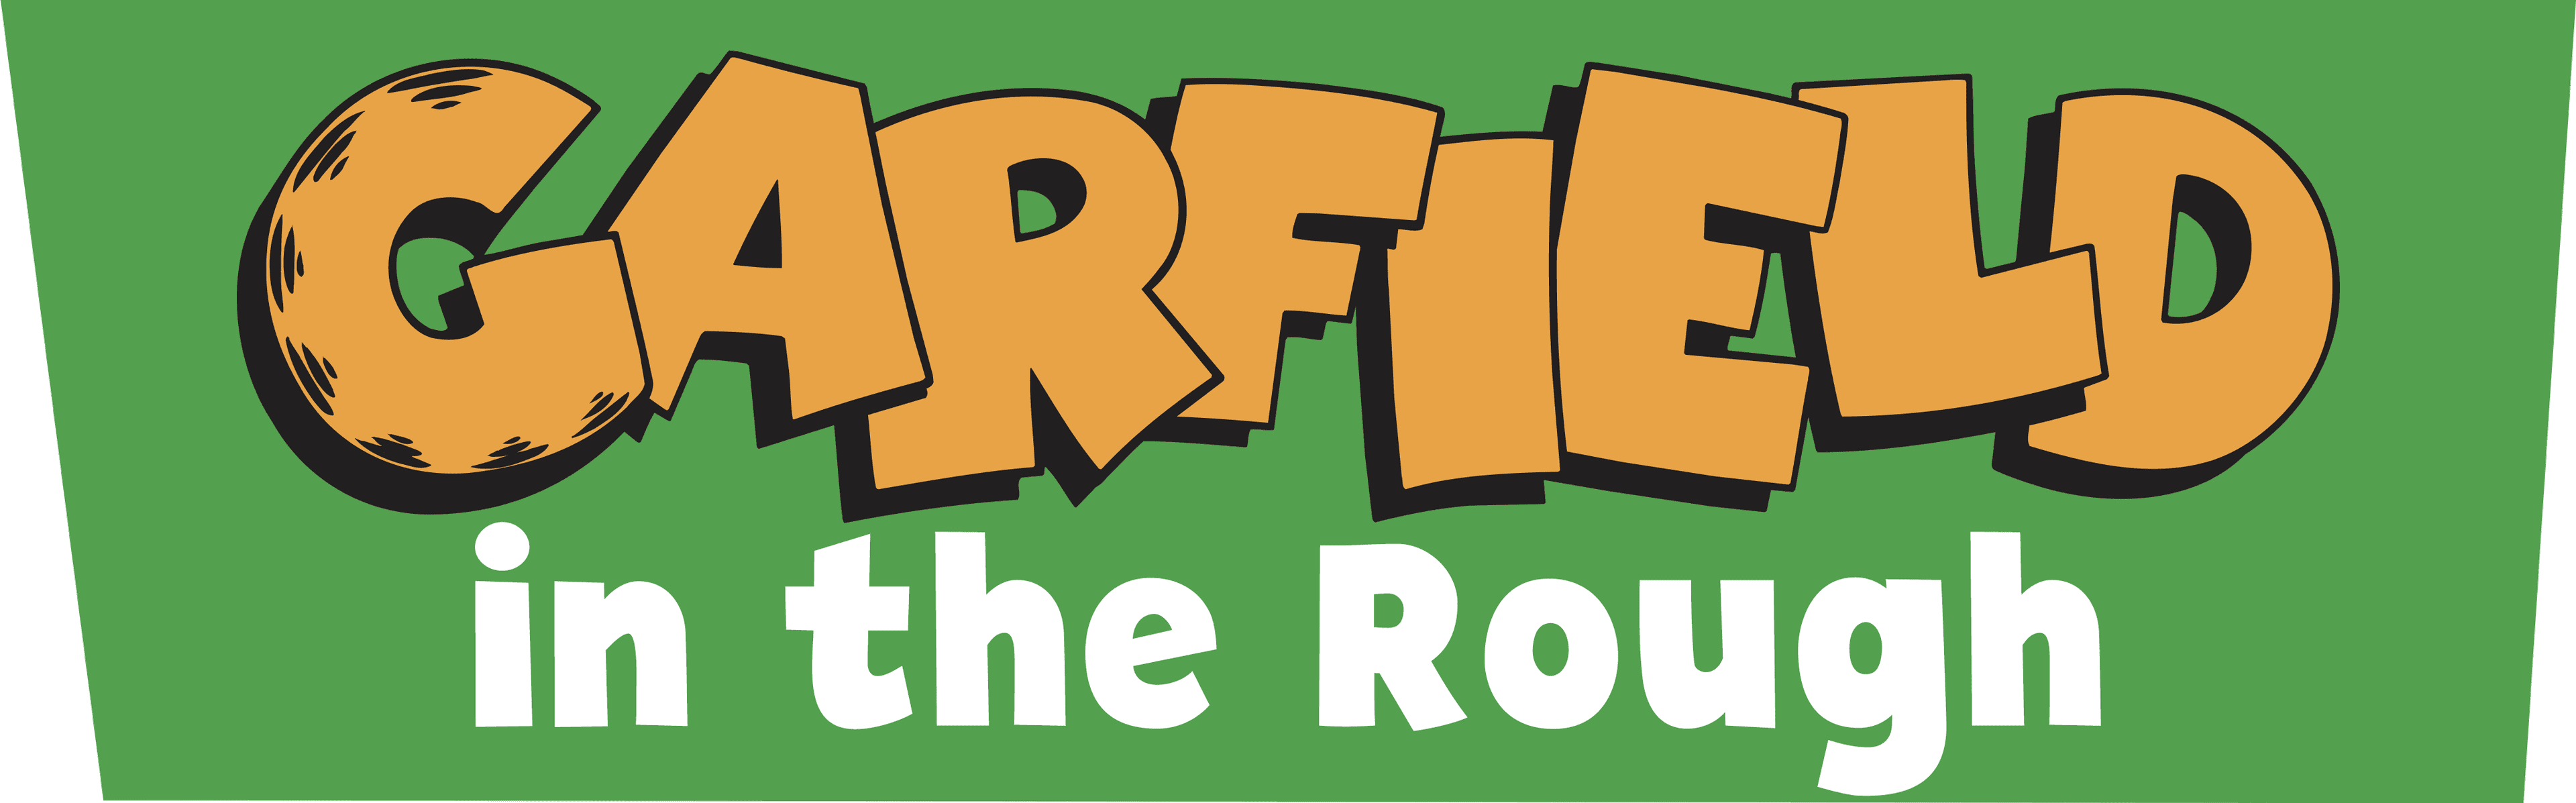 Garfield in the Rough logo